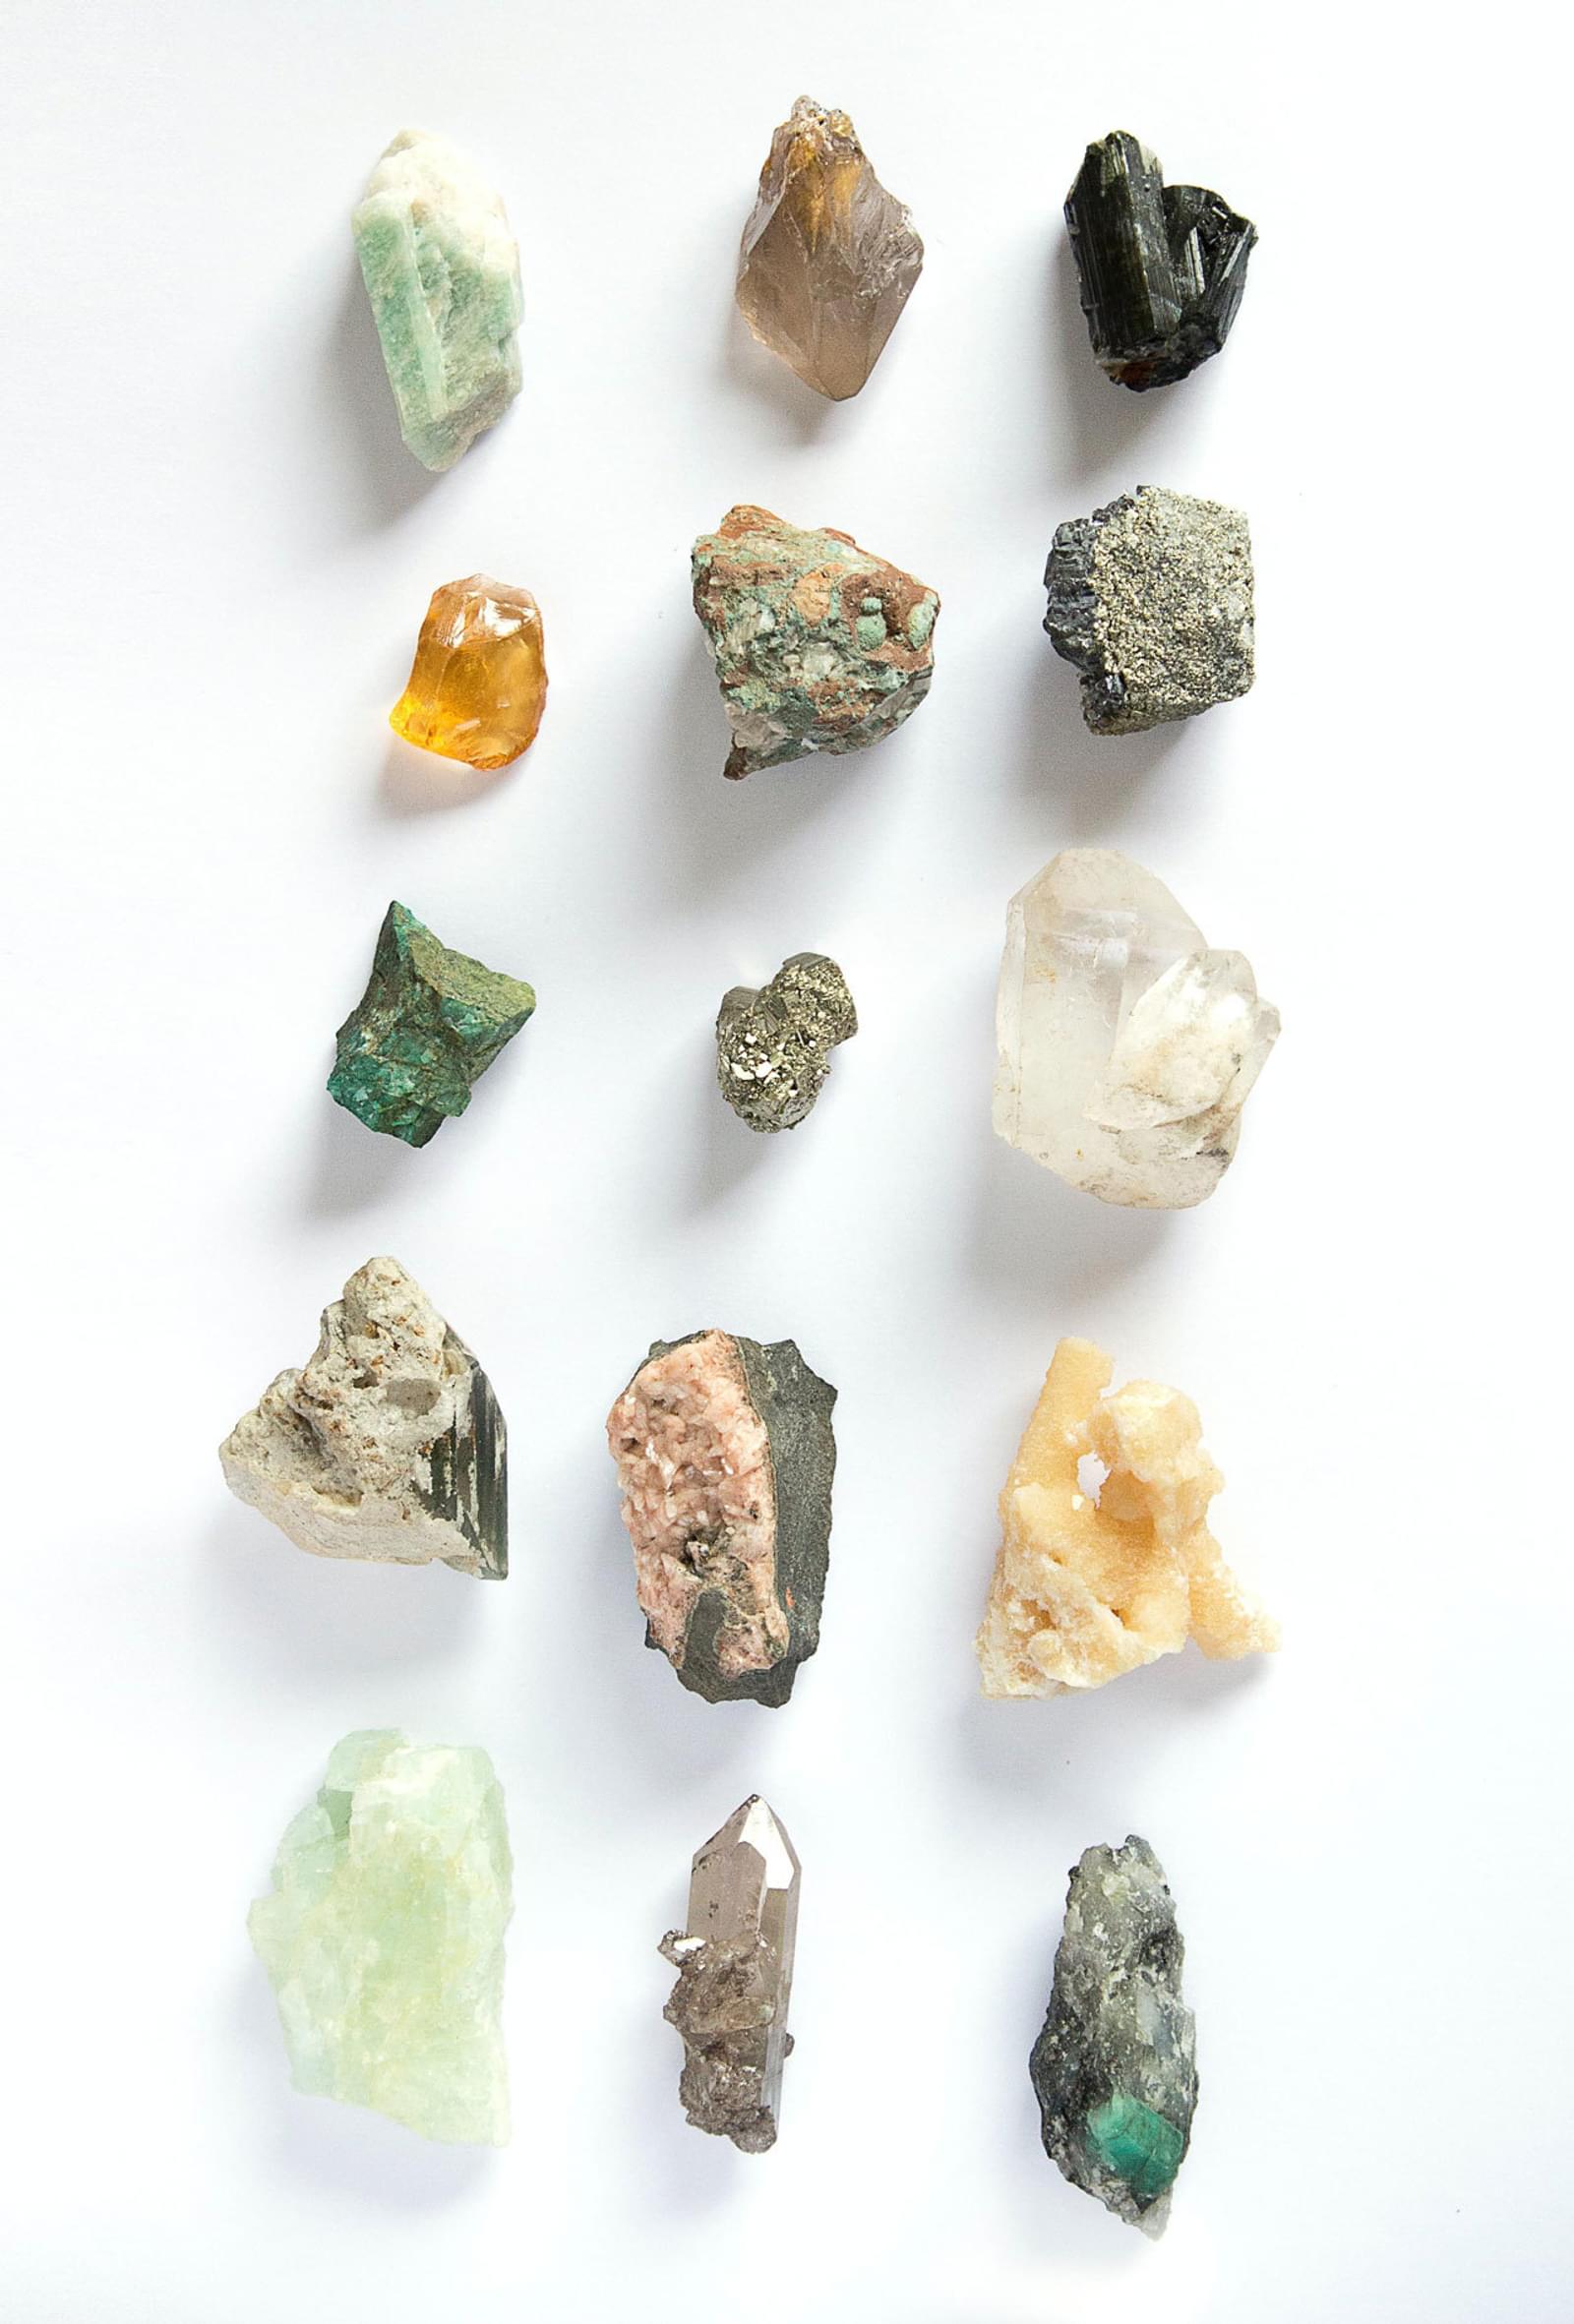 Variety of gemstones relaunchers gem of workforce image vertical